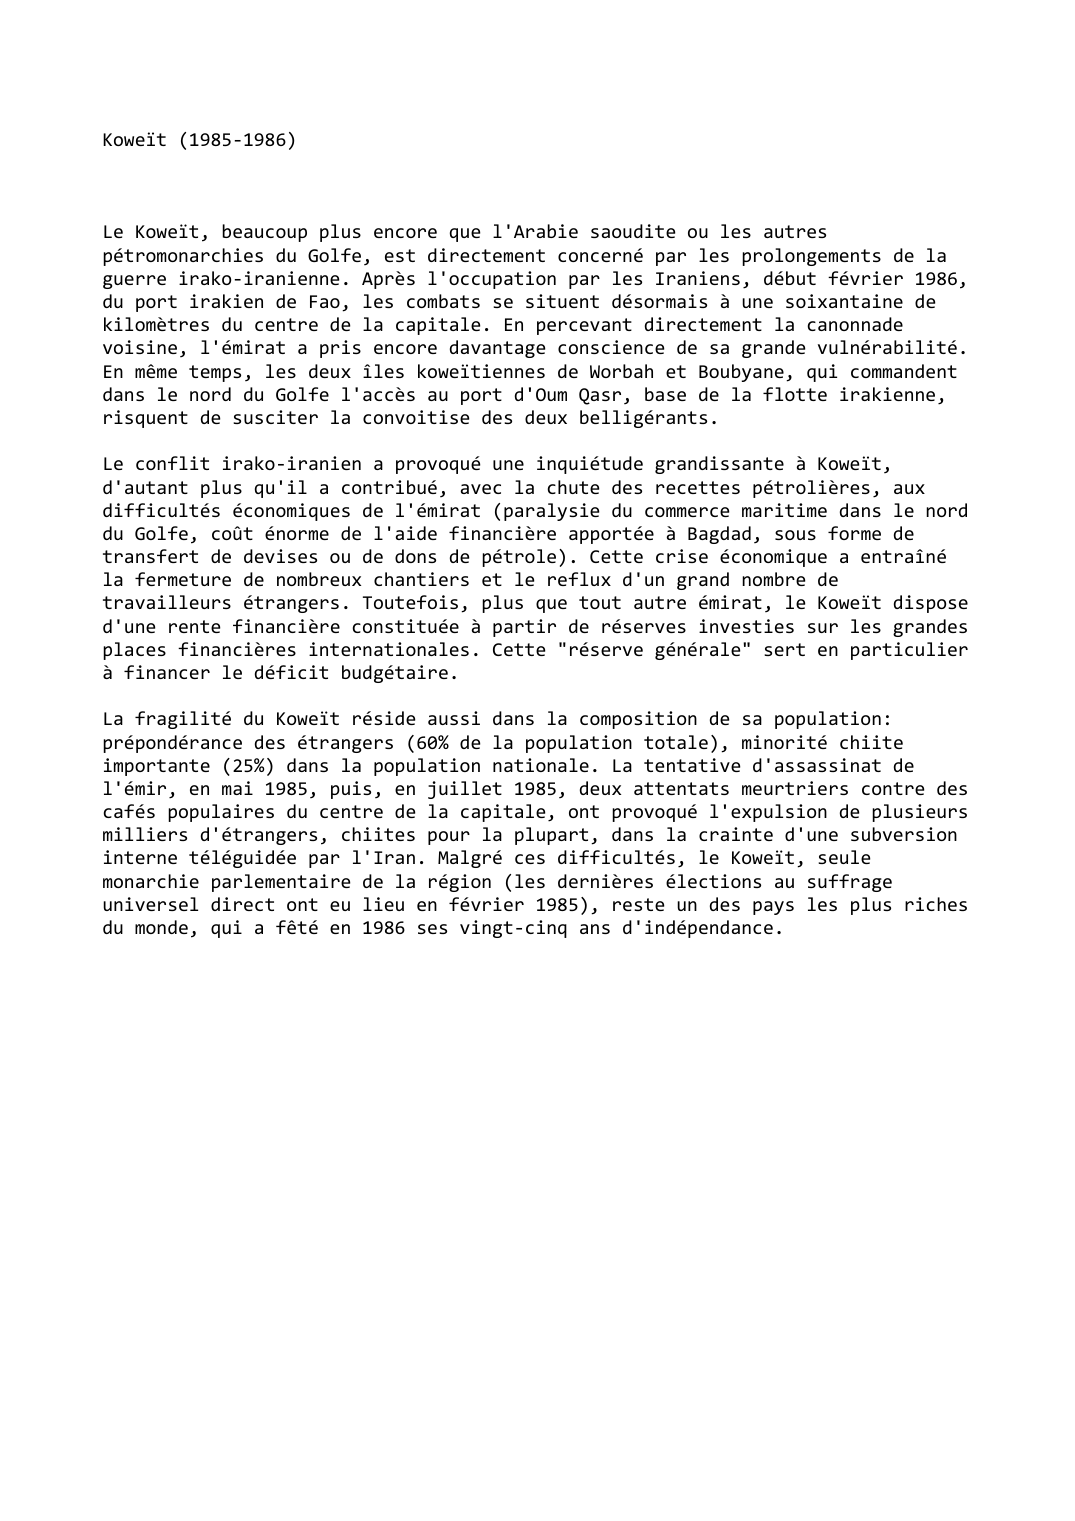 Prévisualisation du document Koweït (1985-1986)